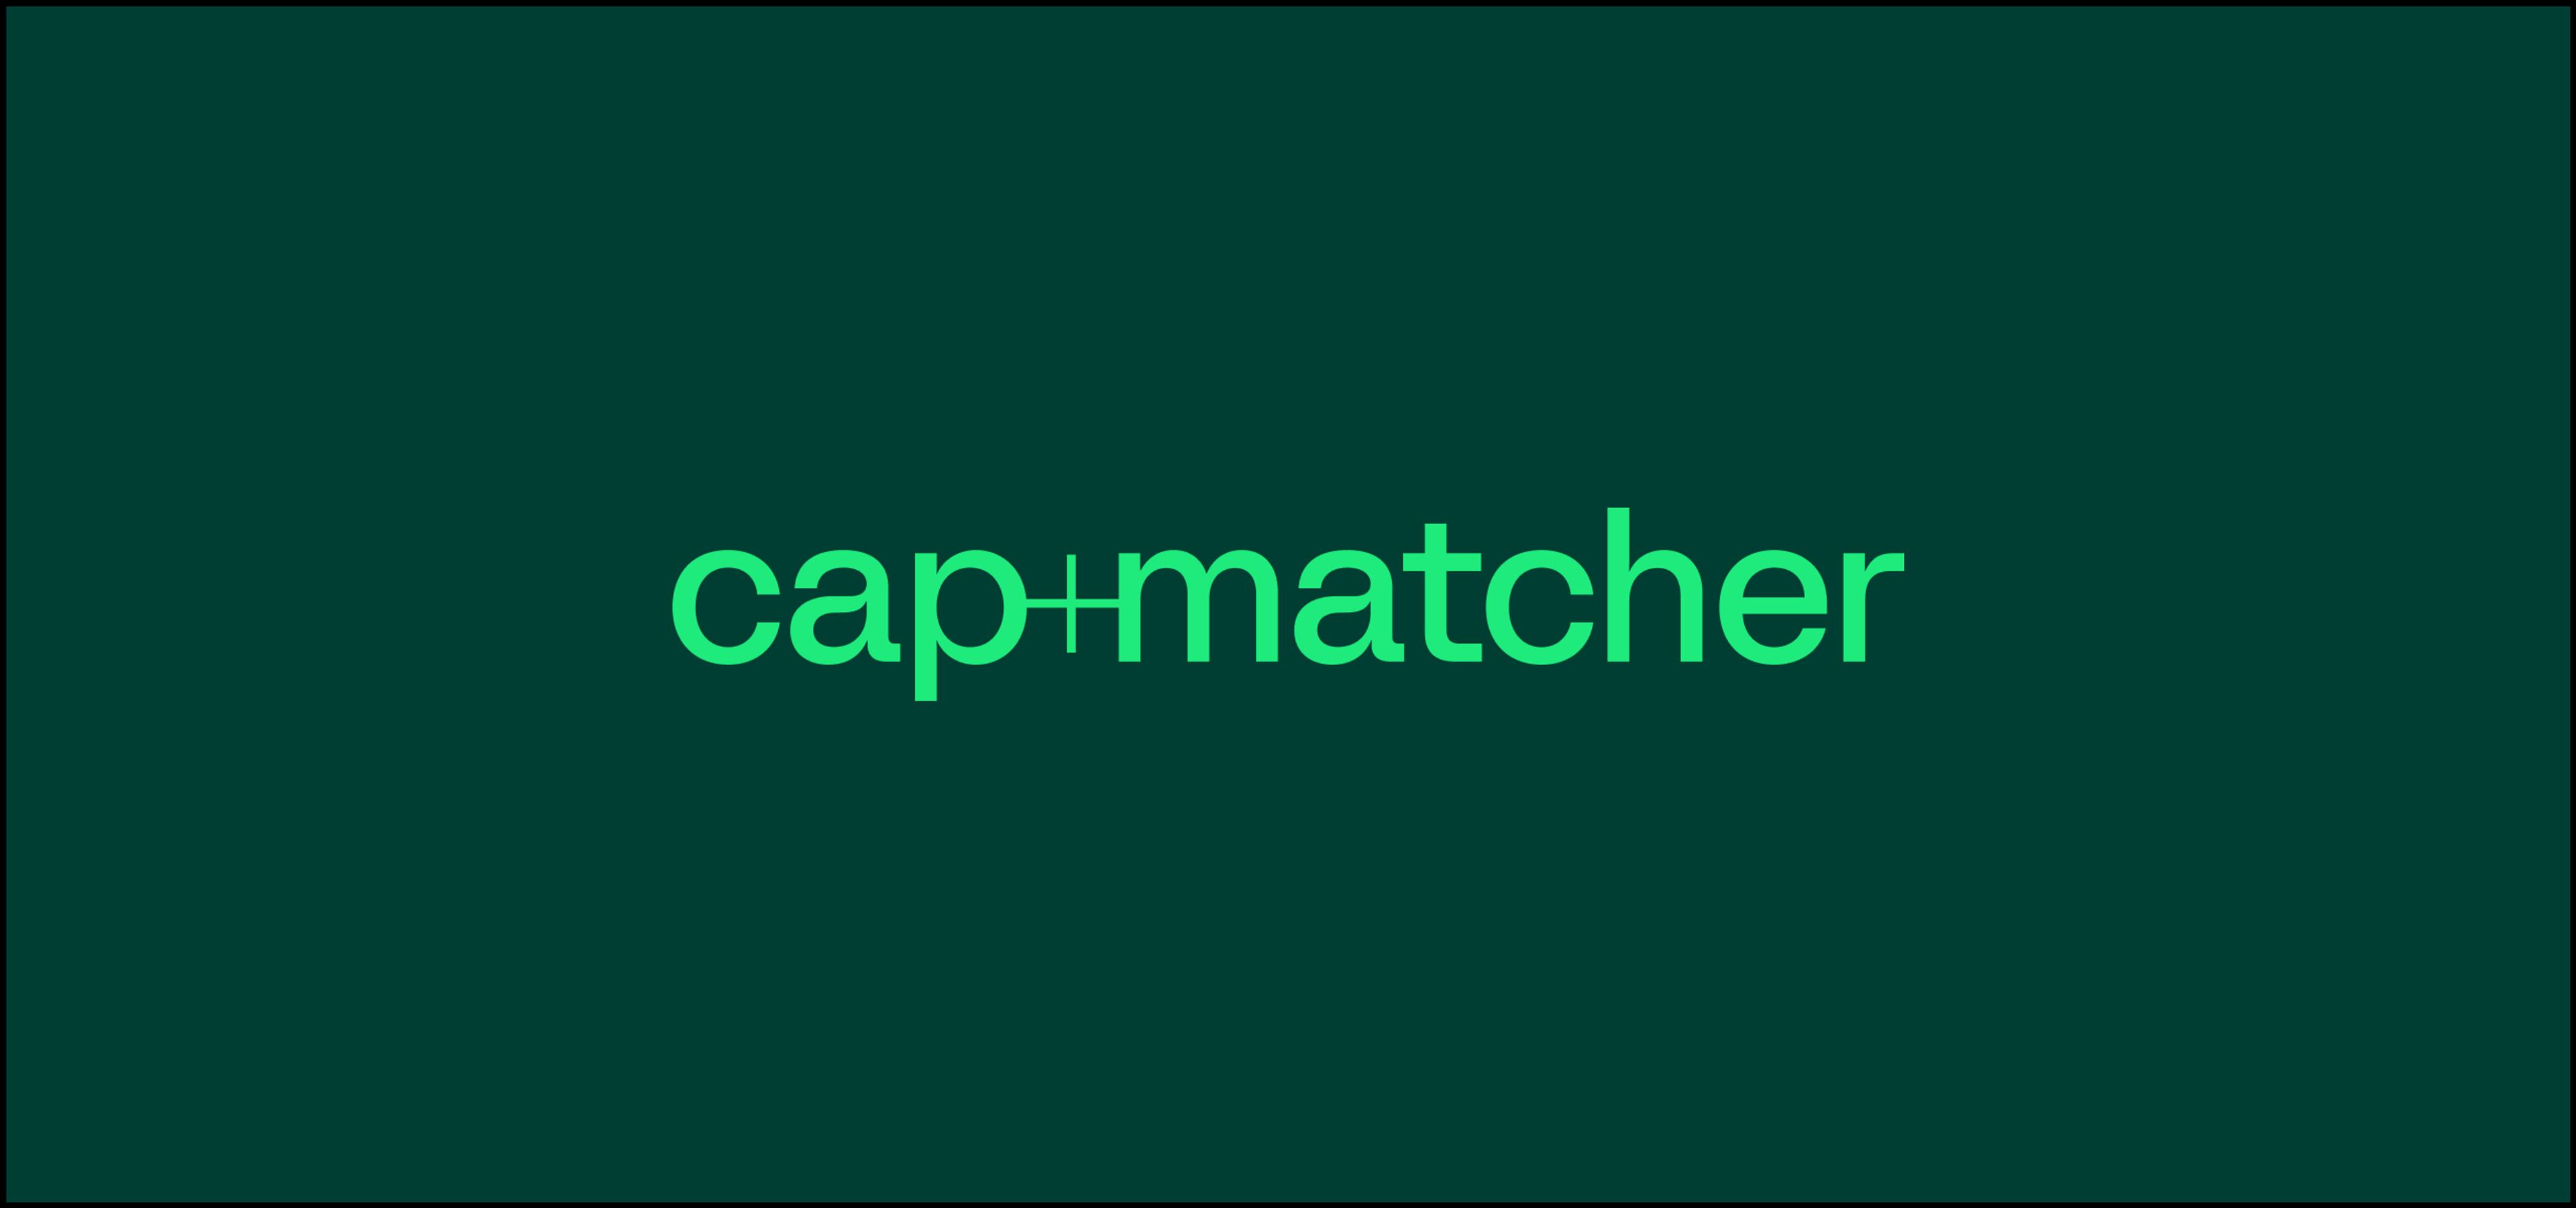 Cover Image for Capmatcher 2.0: Enhanced Investment Platform for Entrepreneurs and Investors